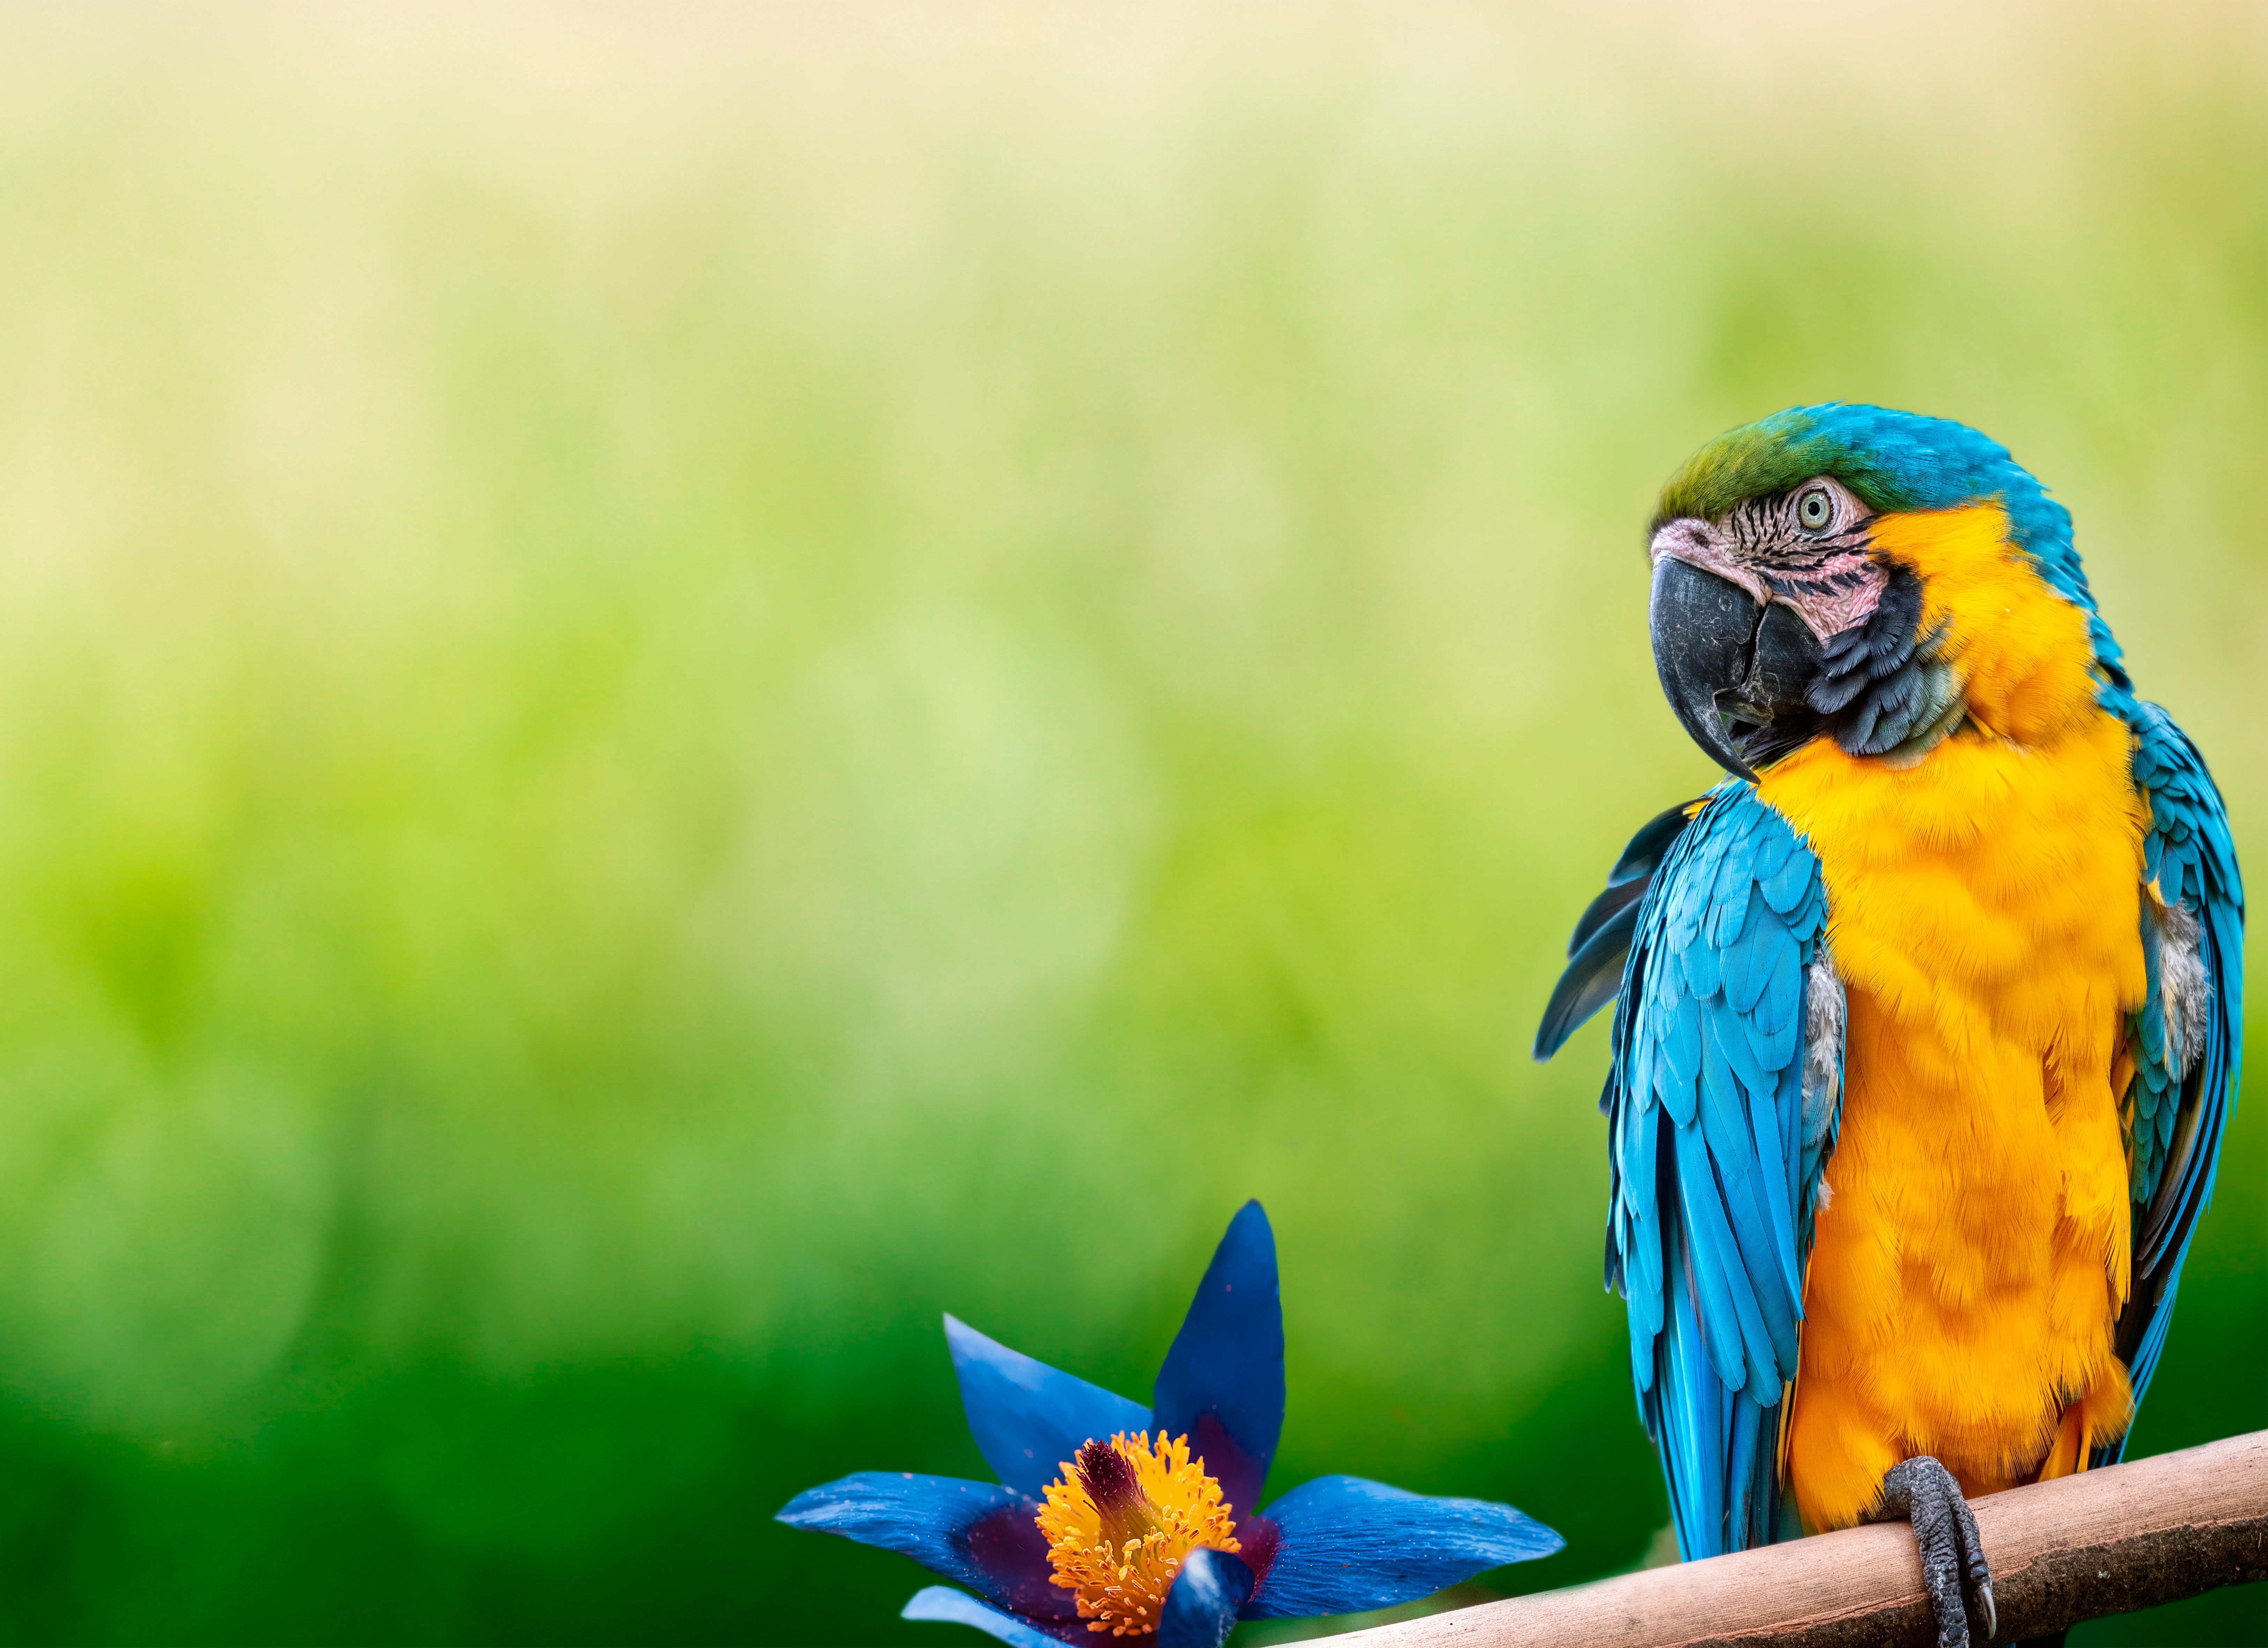 Parrot Macaw Bird Hd Wallpaper Background Mobile Phone Laptop 3840x2400   Wallpapers13com